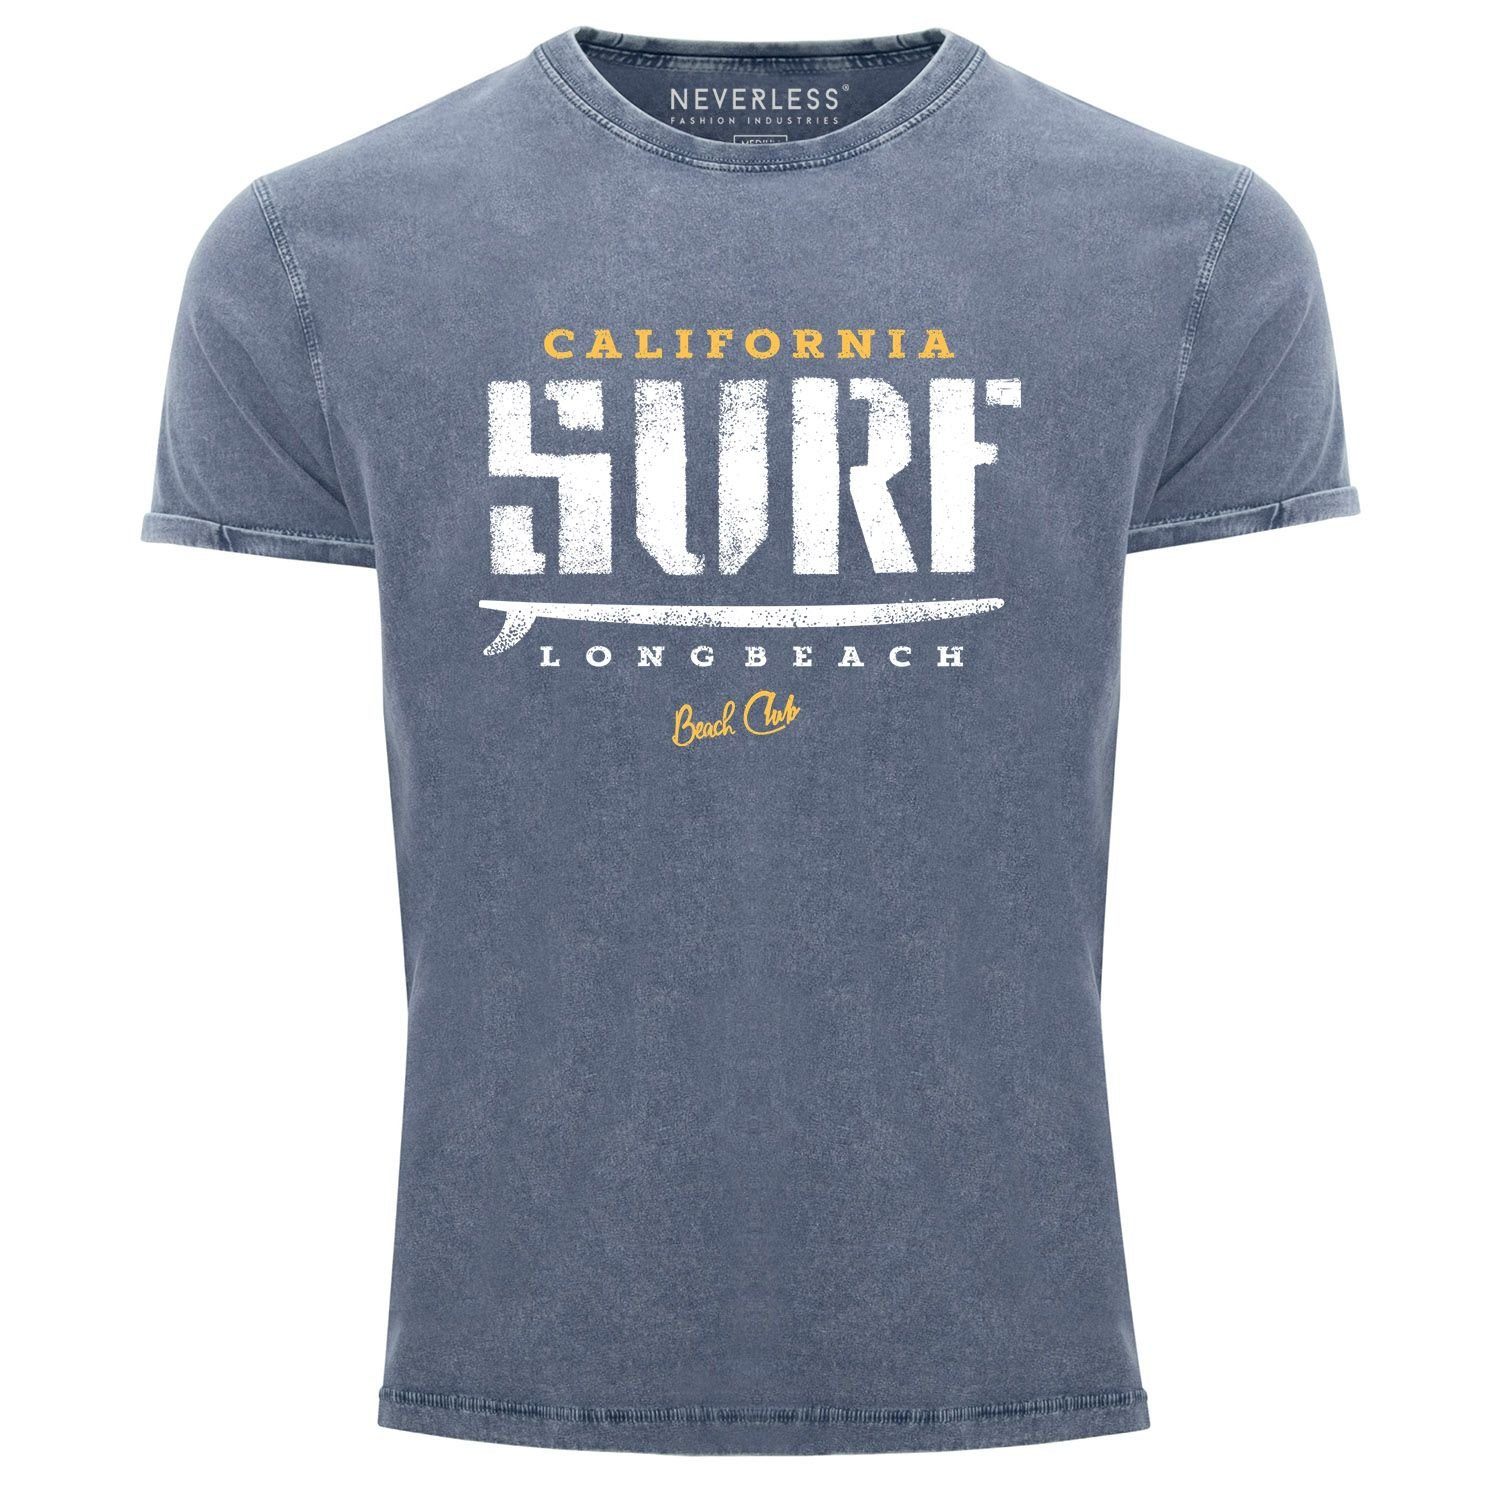 Neverless Print-Shirt Cooles Angesagtes Herren T-Shirt Vintage Shirt California Surf Aufdruck Used Look Slim Fit Neverless® mit Print blau